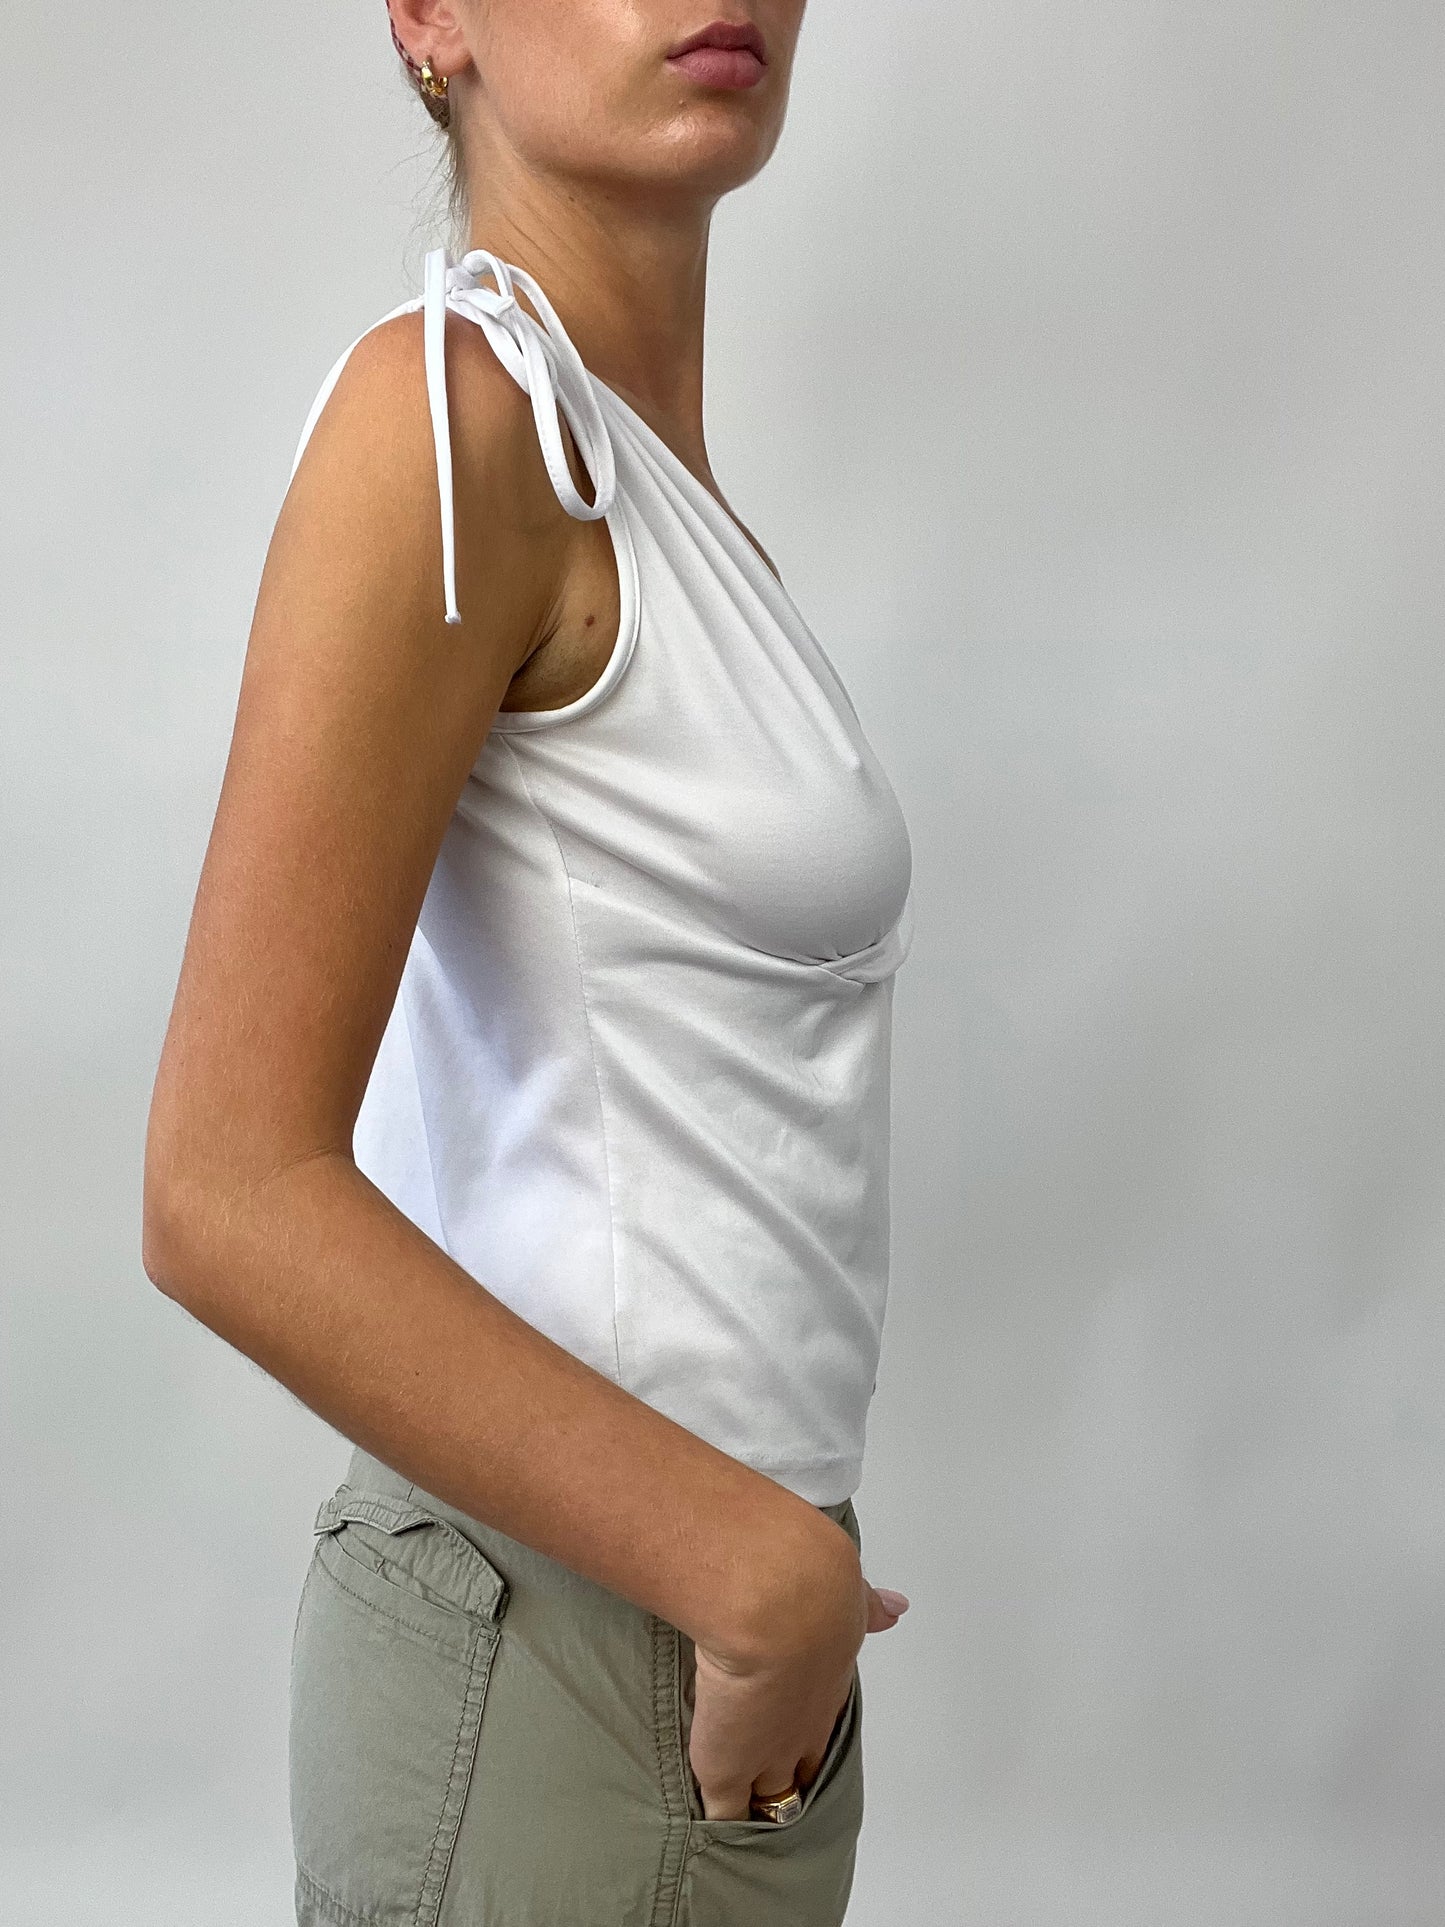 PUB GARDEN DROP | medium white v neck cami